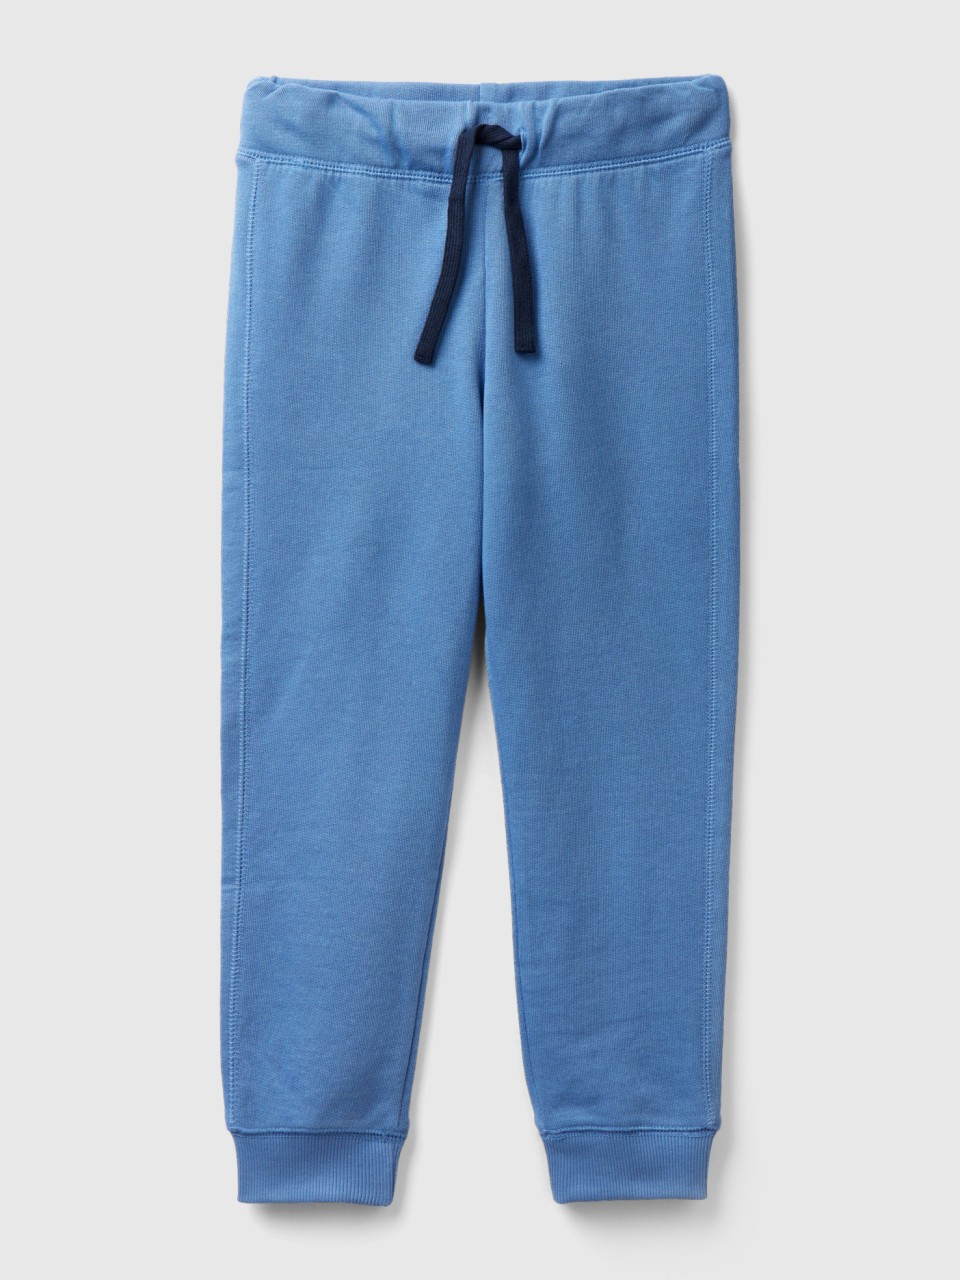 Benetton, 100% Cotton Sweatpants, Light Blue, Kids